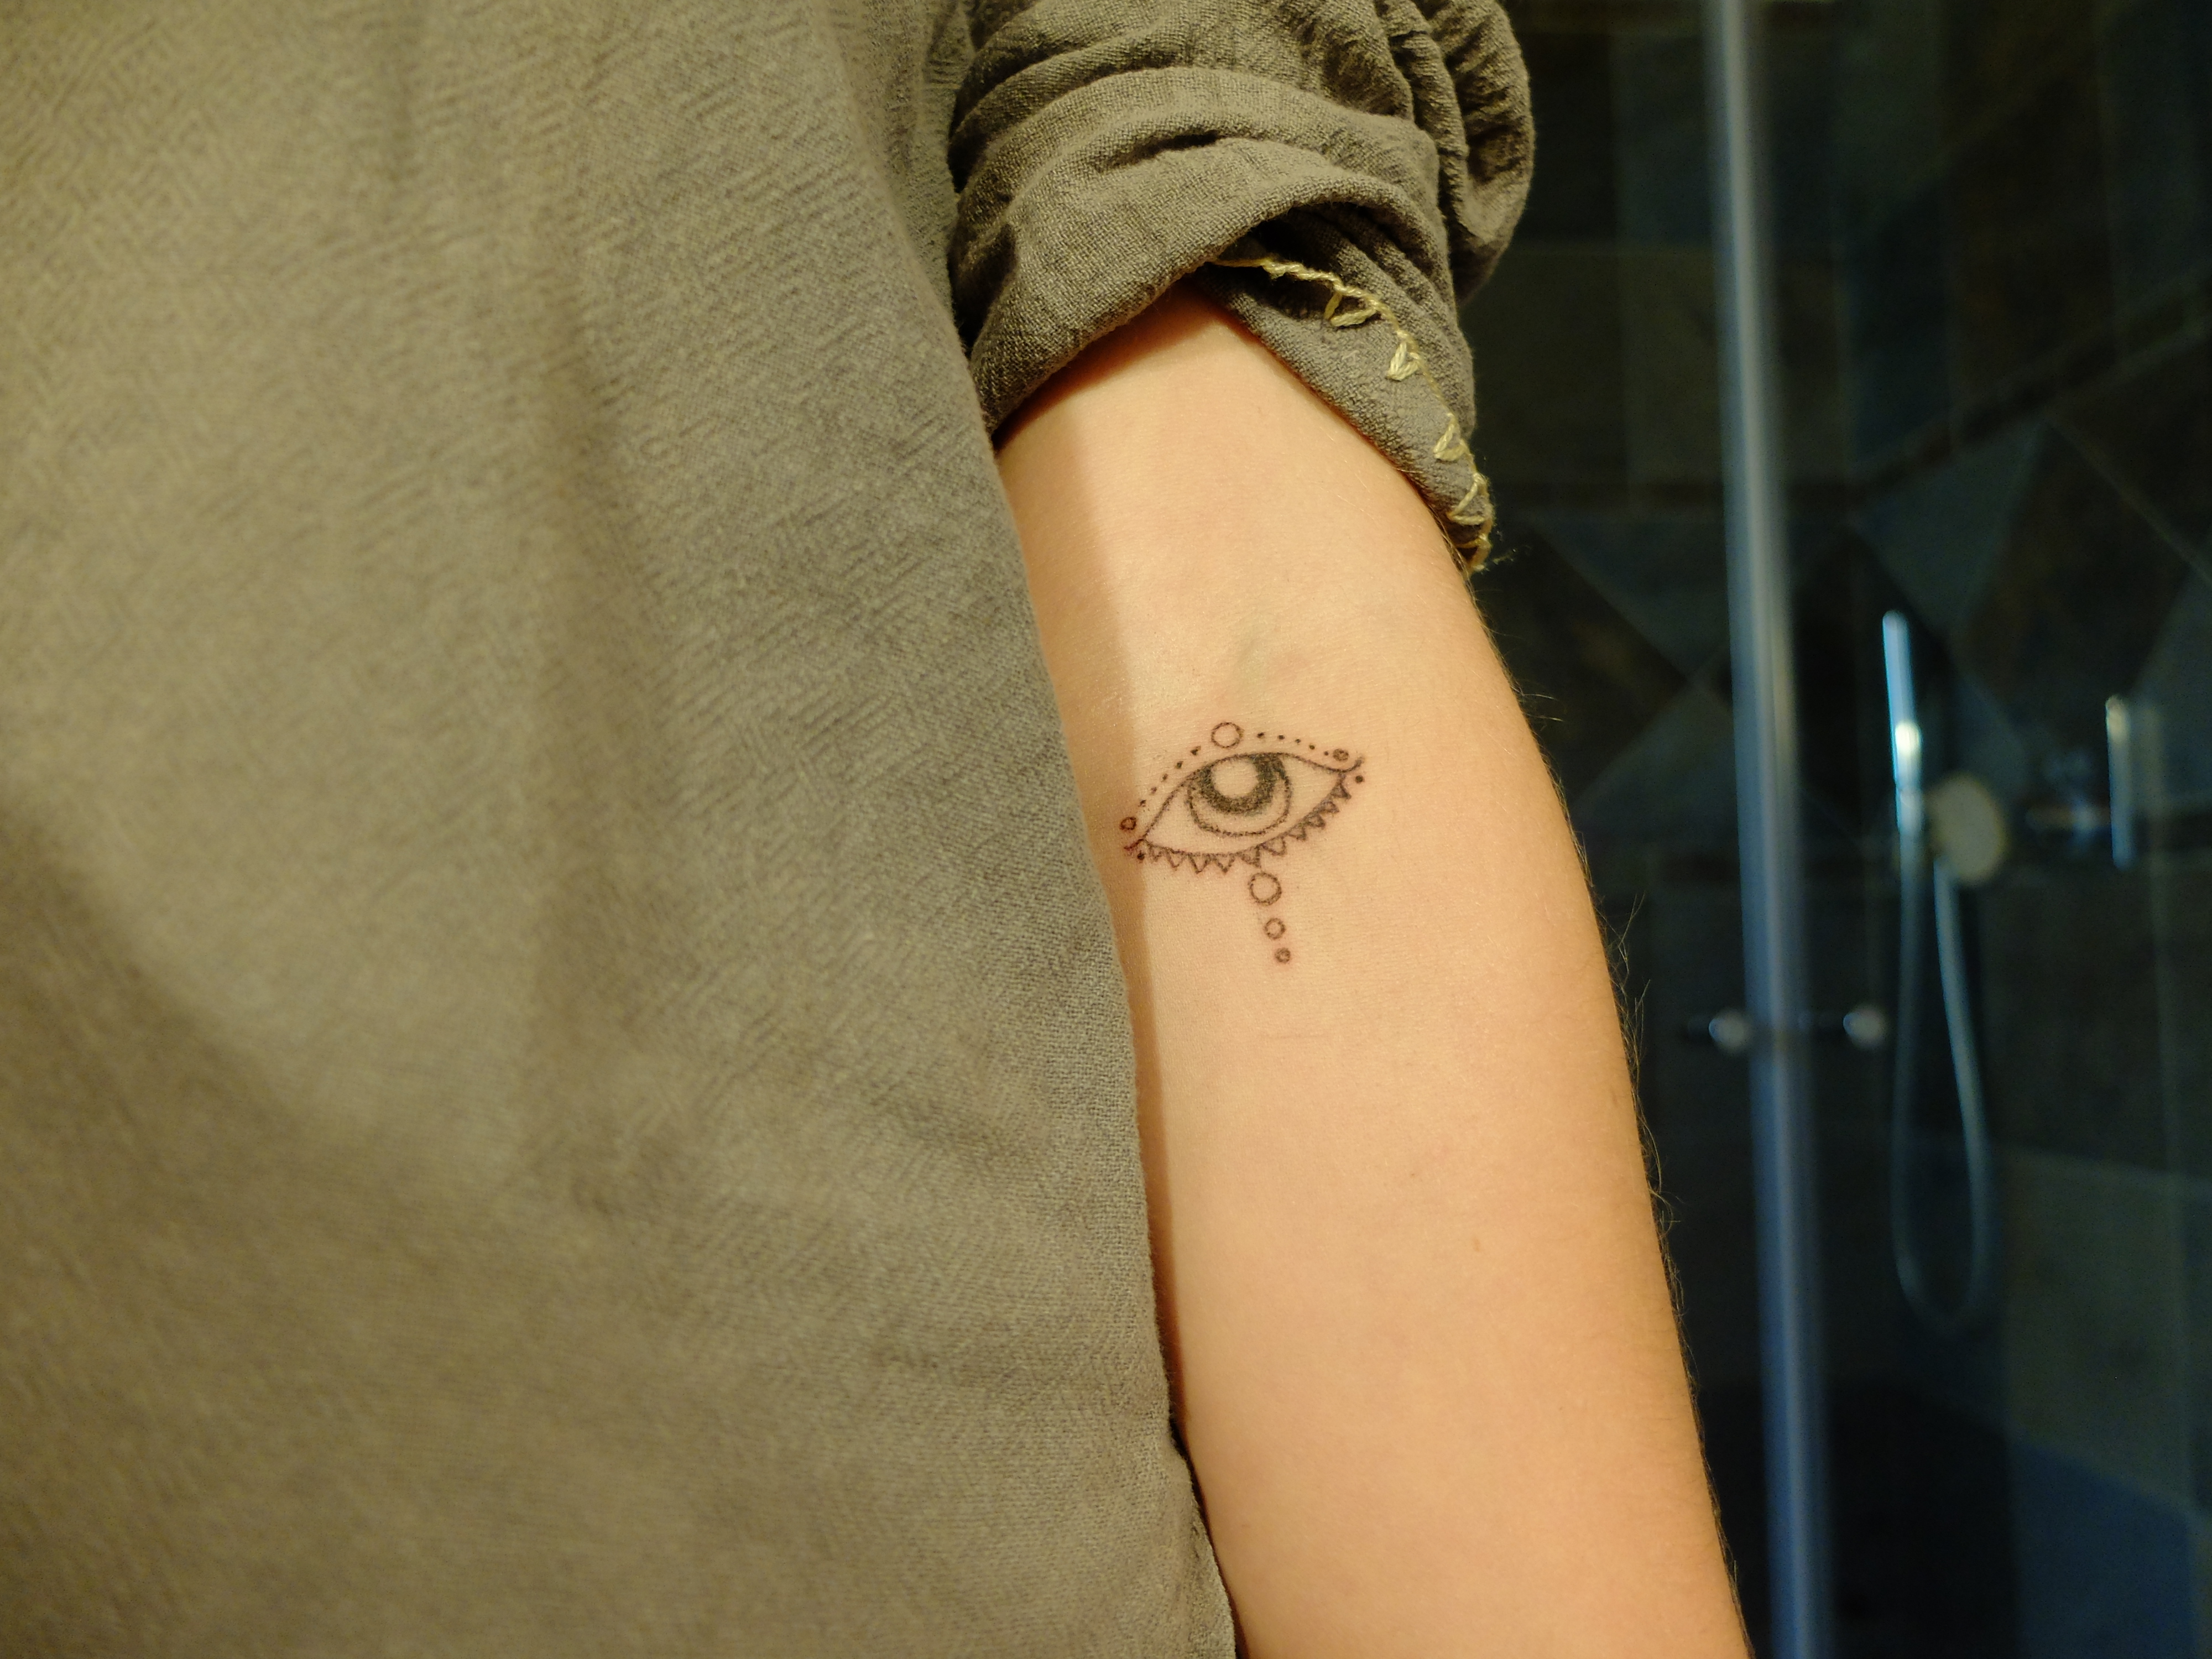 inktober 1 - stick'n'poke tattoo by Ajerf on DeviantArt